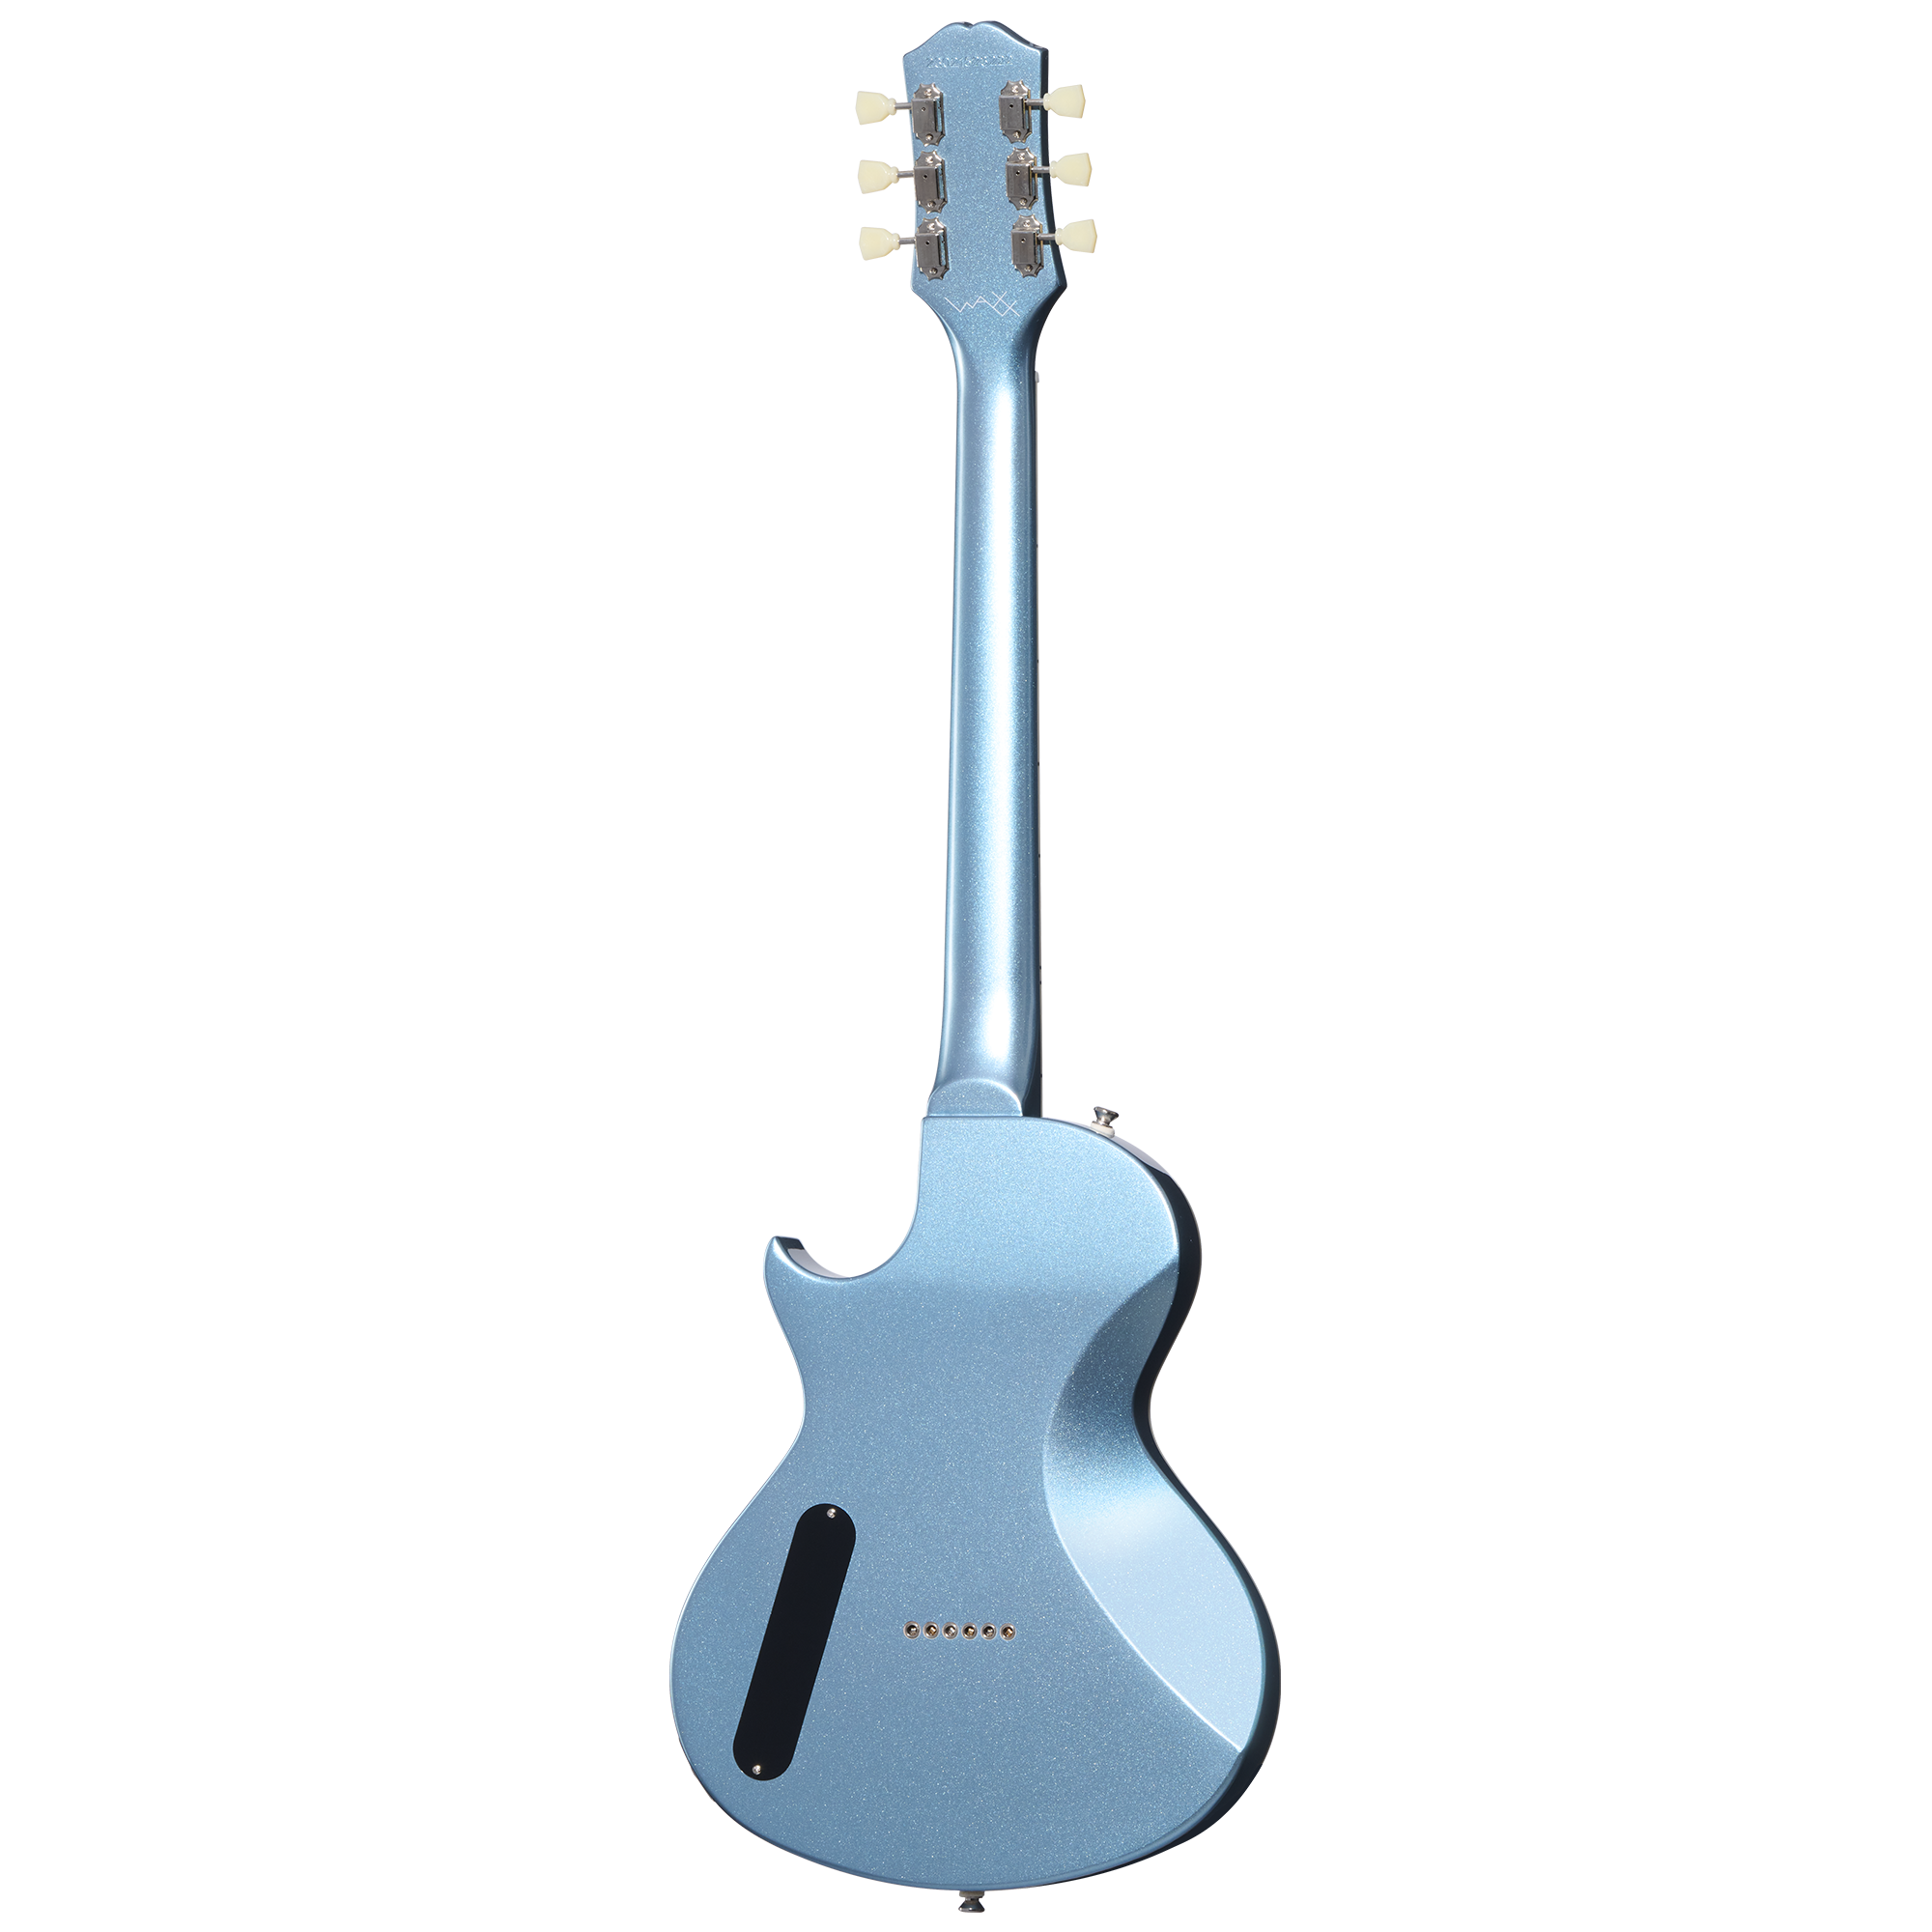 Epiphone Nighthawk Studio Waxx Hh Ht Lau - Pelham Blue - Guitarra eléctrica de corte único. - Variation 1